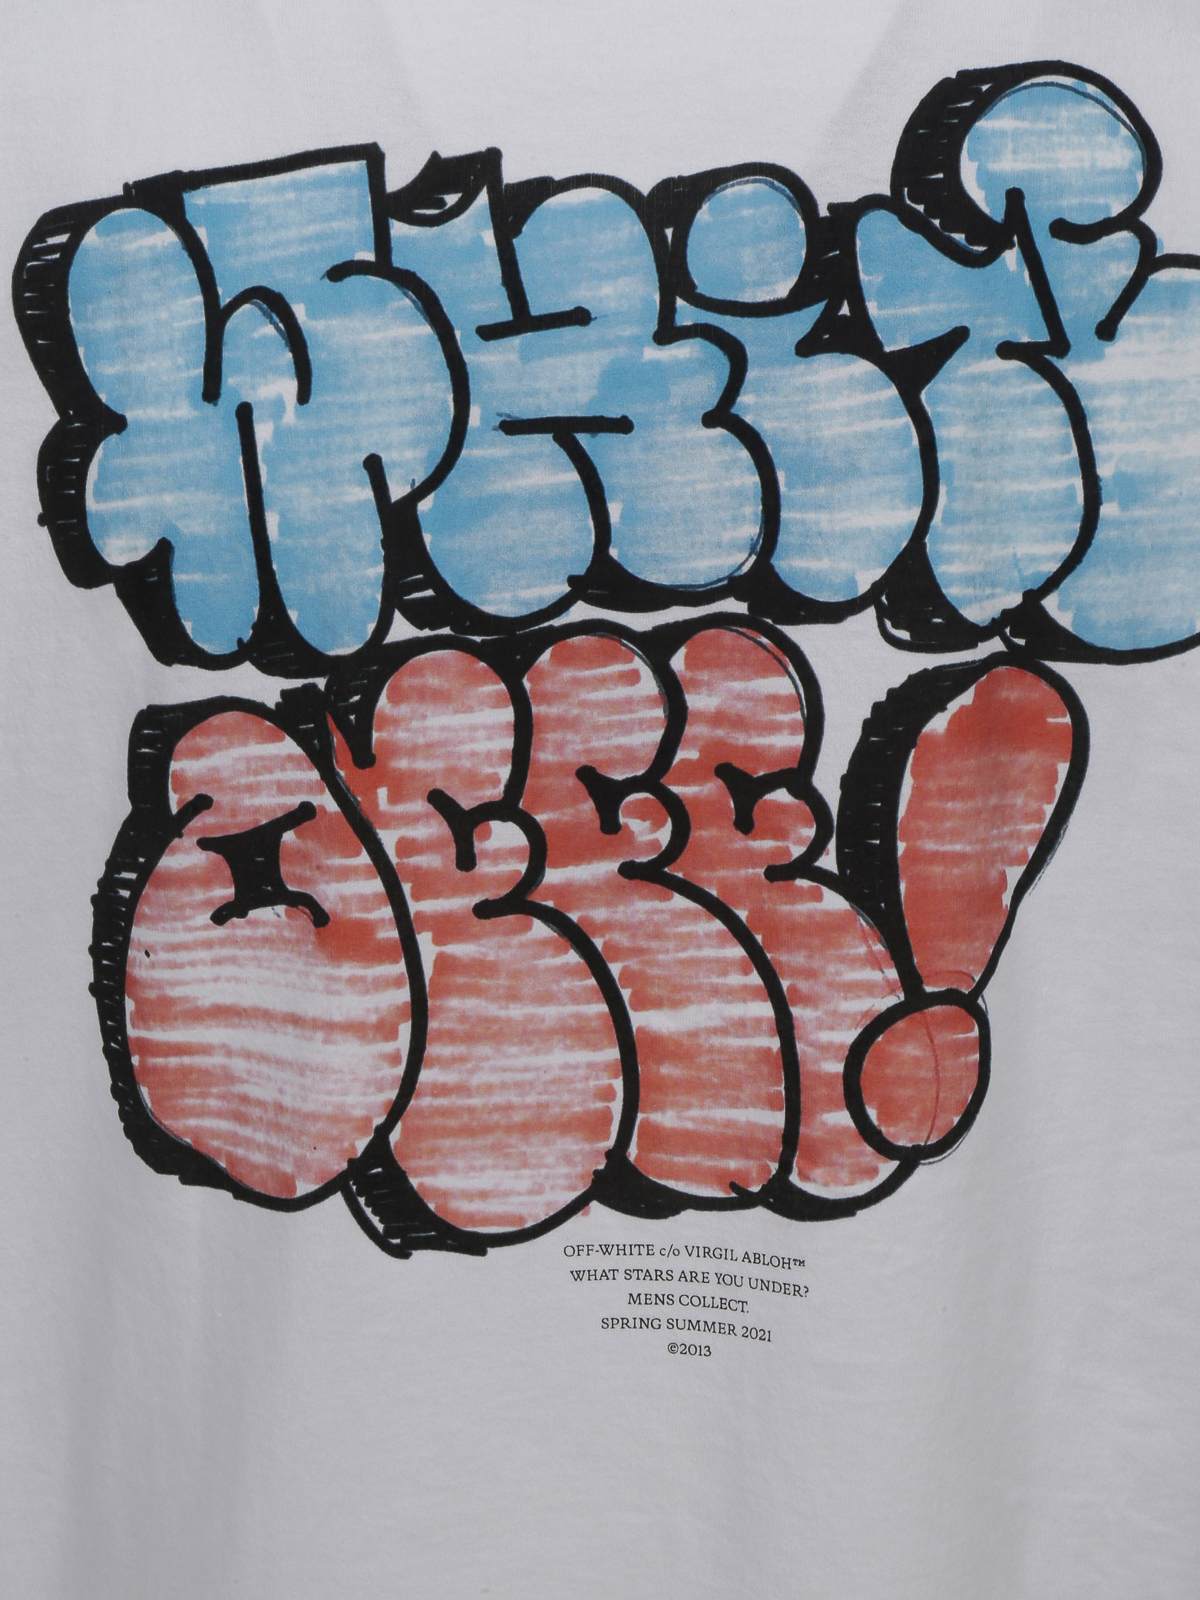 Offf Graffiti Logo T-shirt